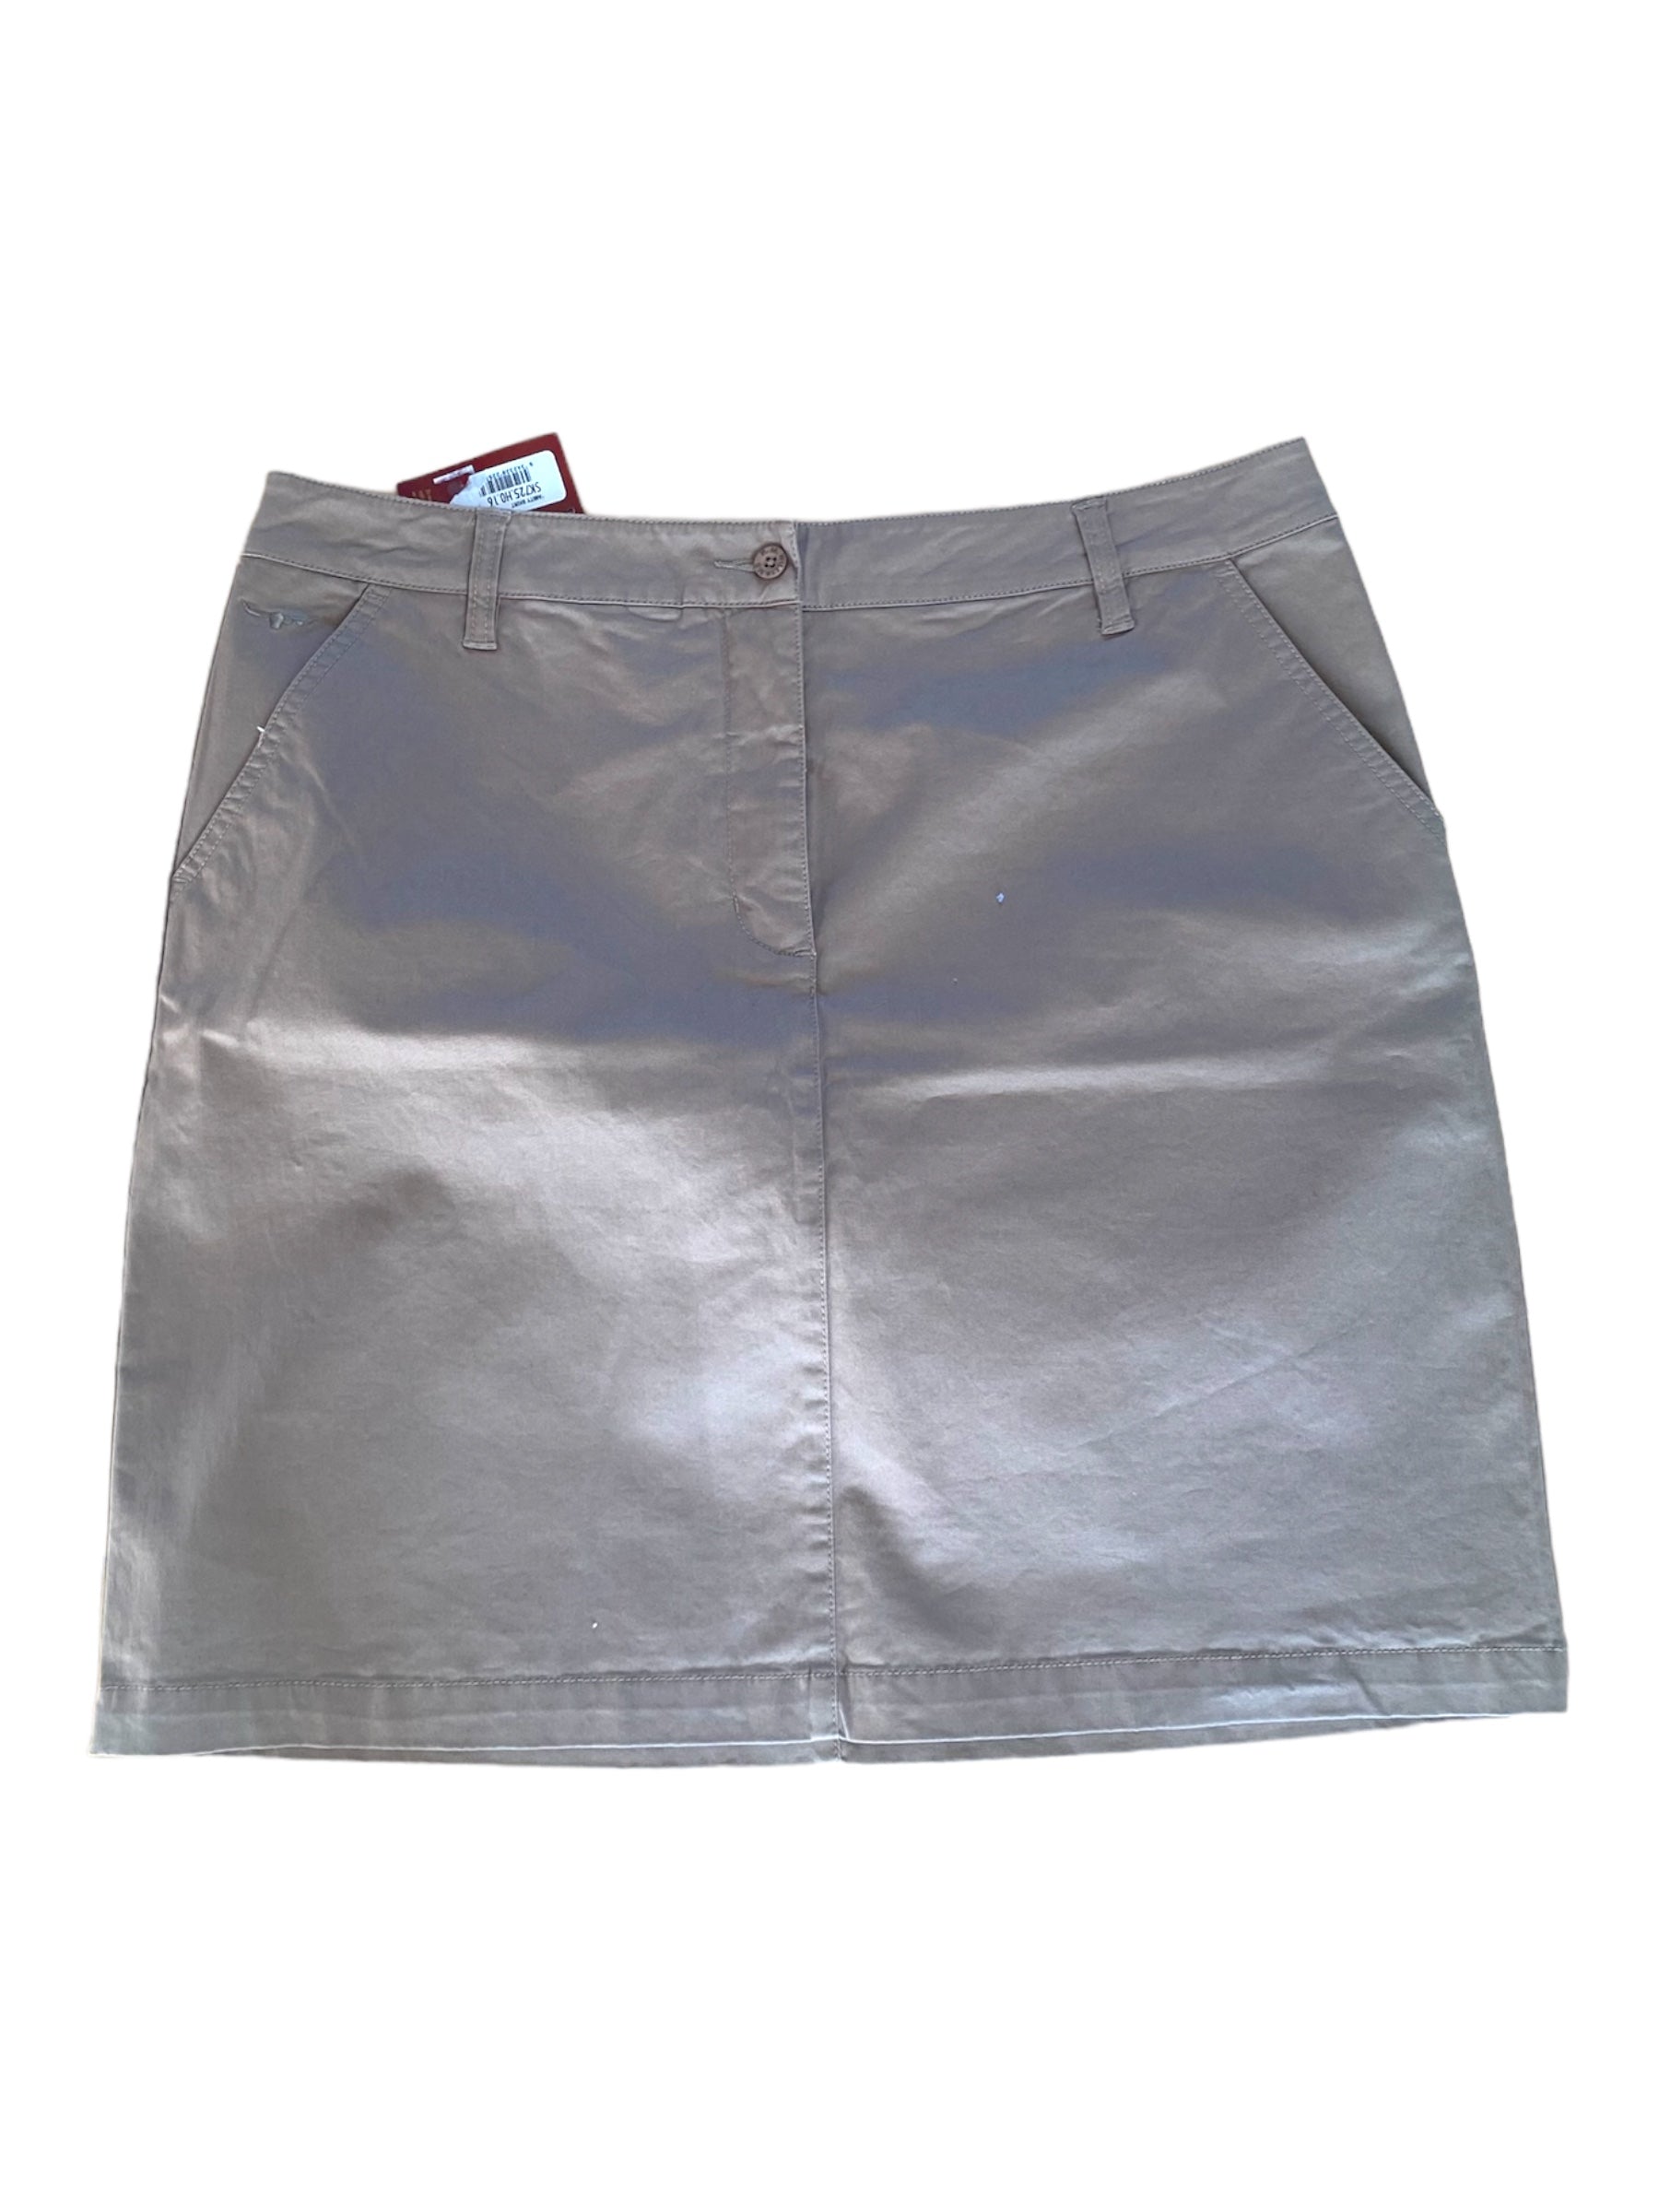 R.M Williams Tan Skirt | Size 16